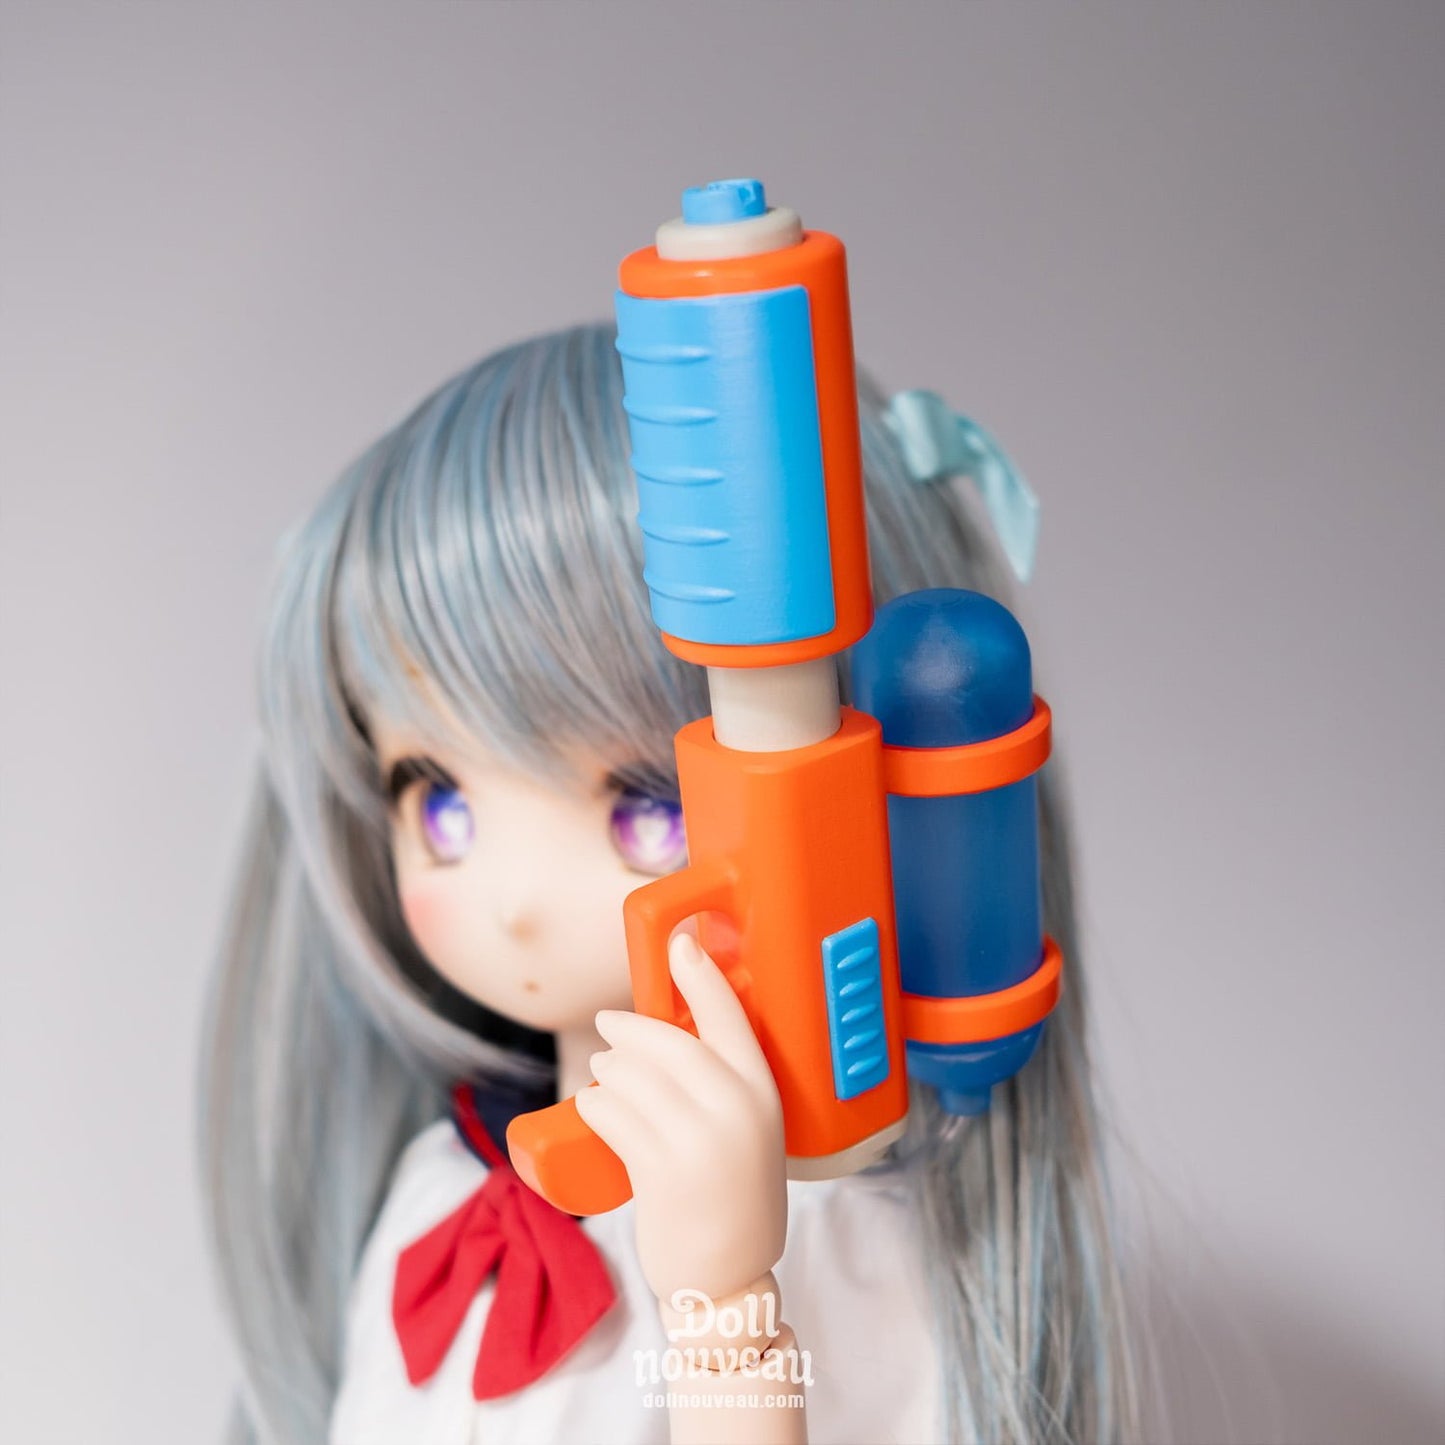 Water Gun - Soaker (Orange)